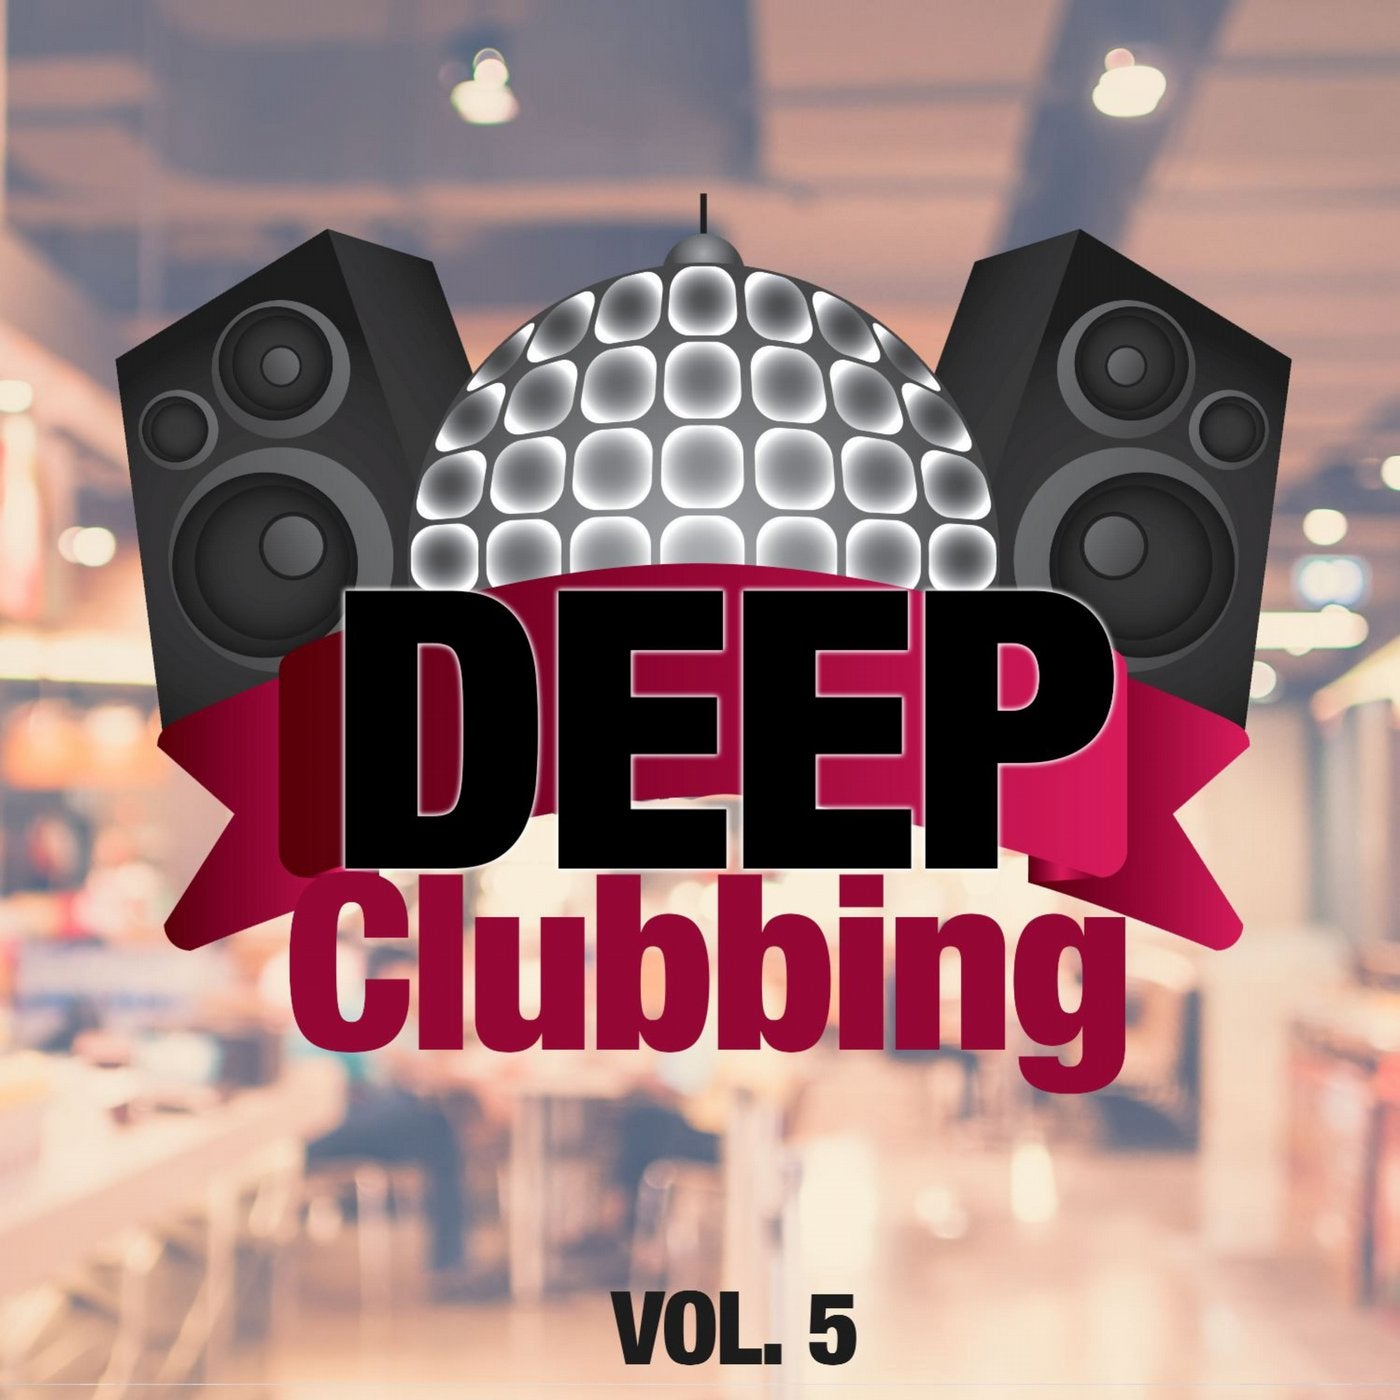 Deep Clubbing Vol. 5